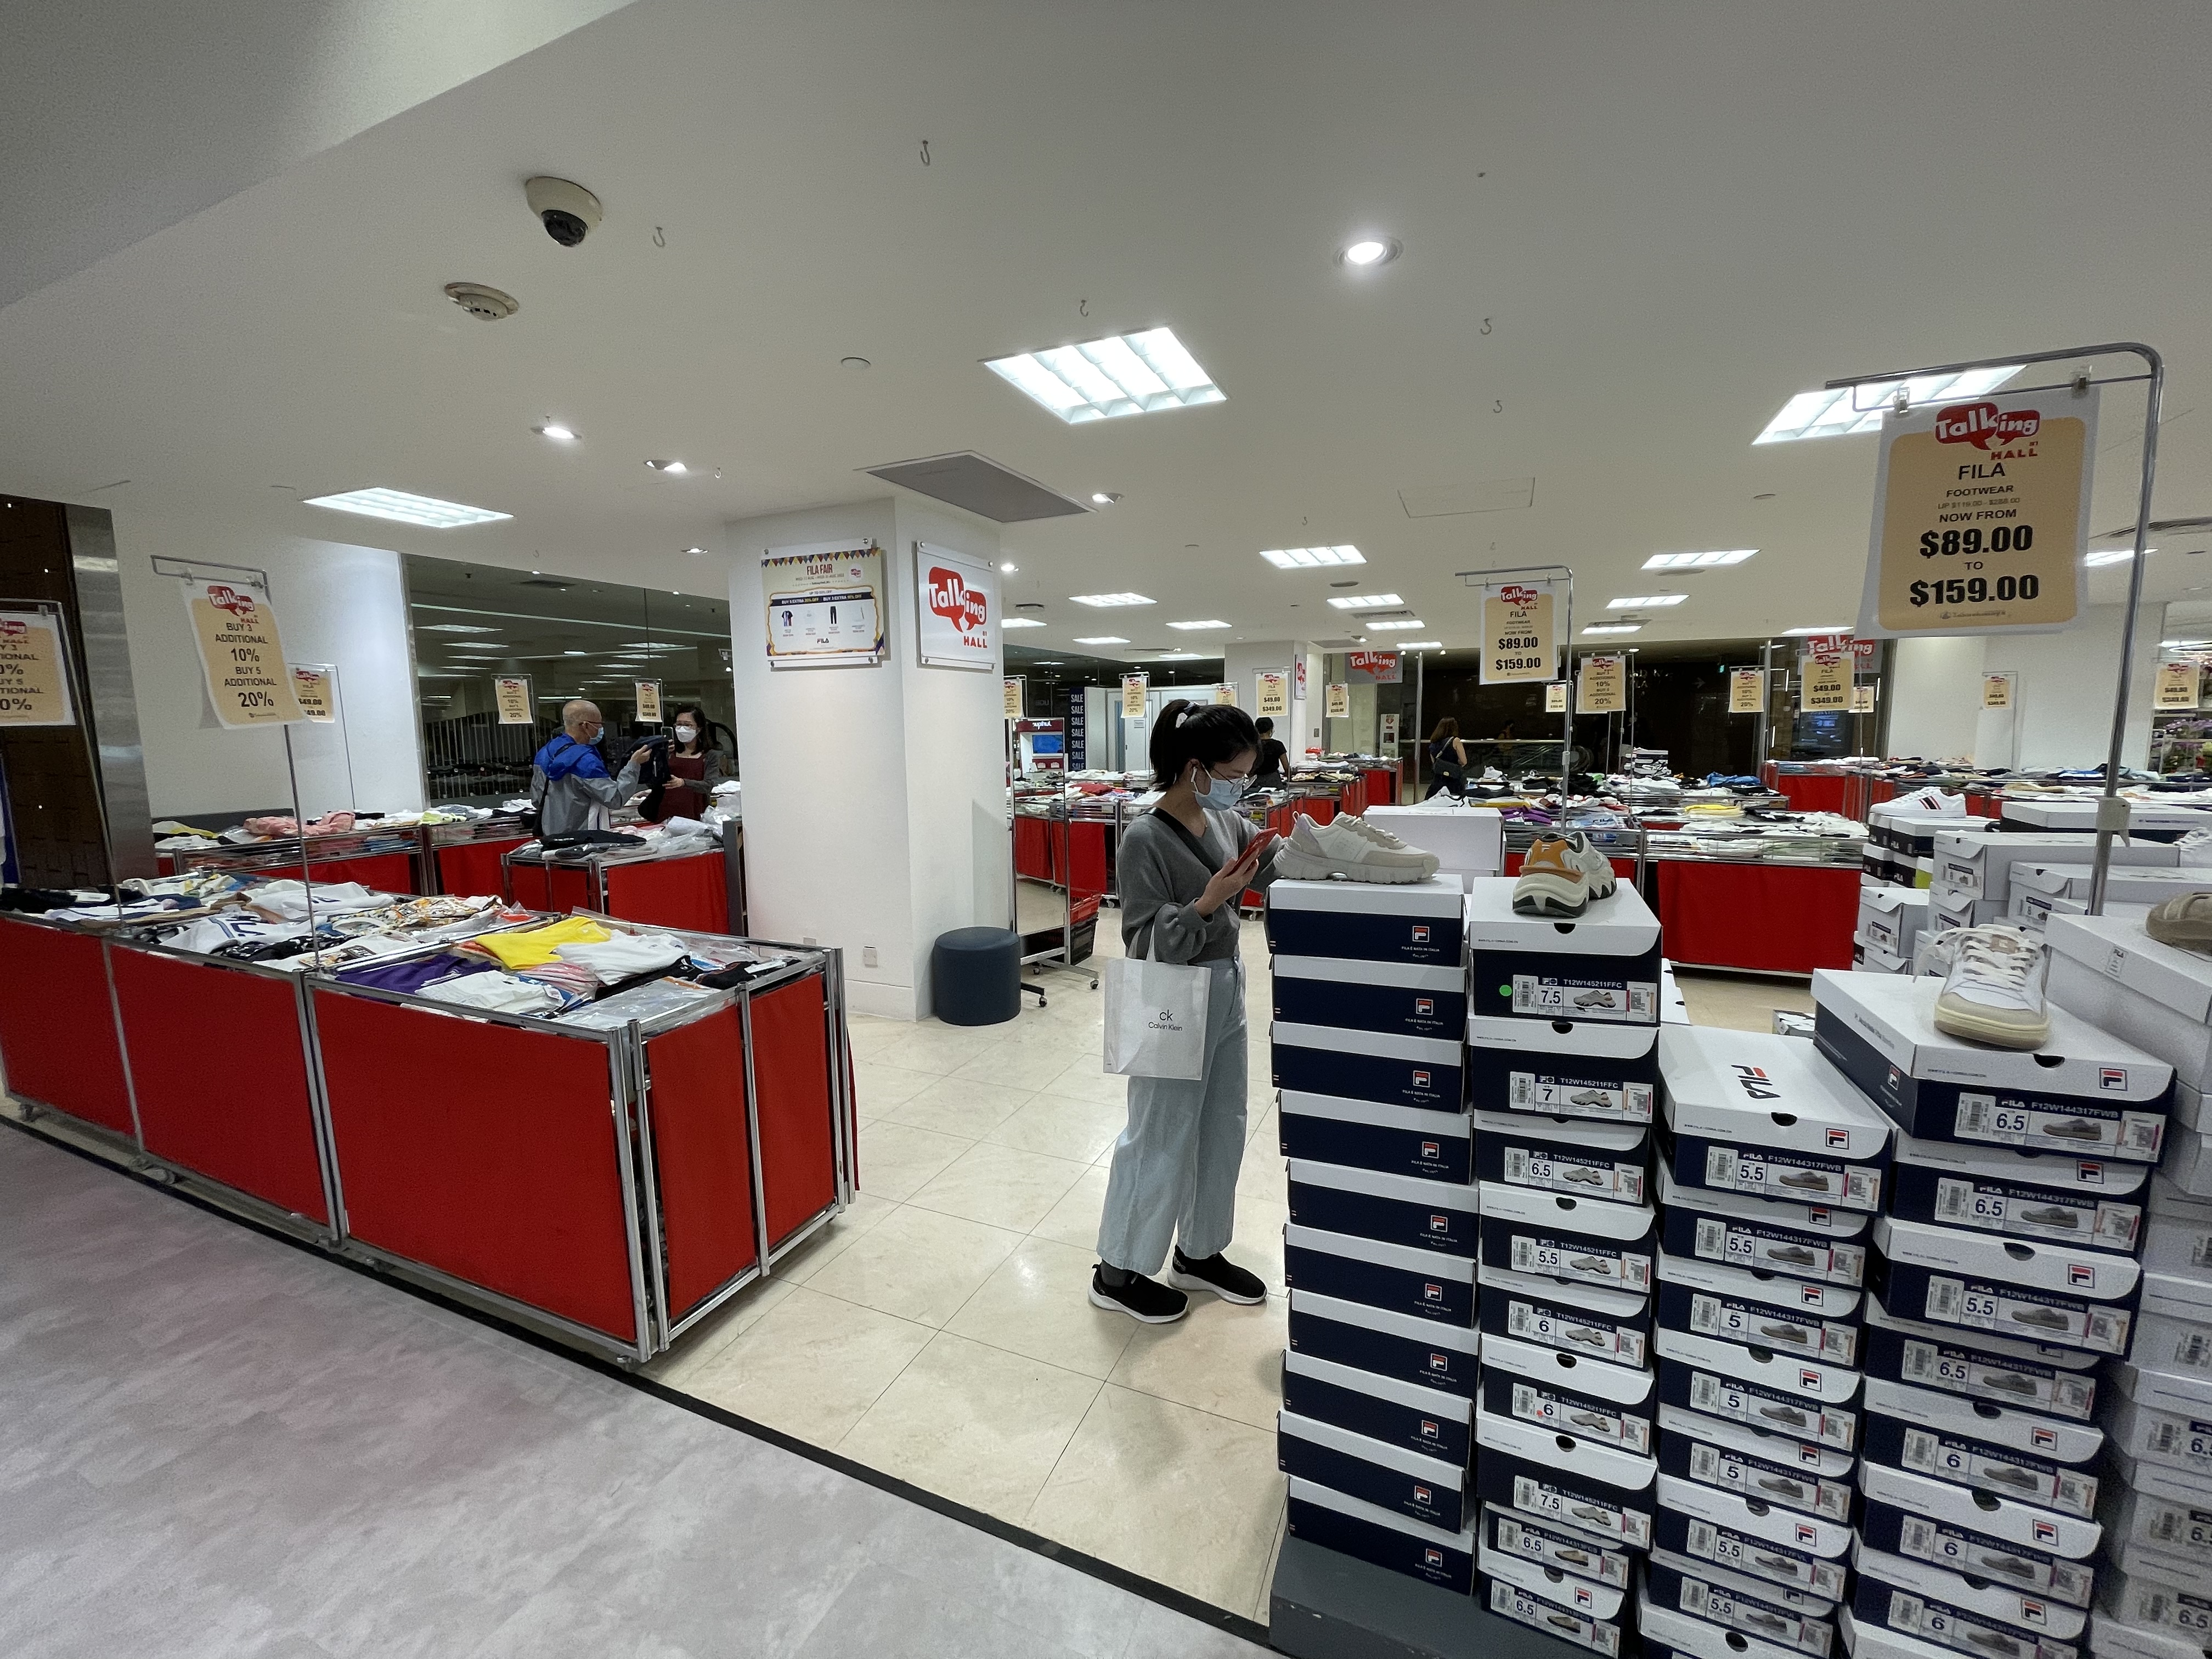 Lobang: Takashimaya has a huge FILA Fair offering up to 50% off footwear and apparels till 31 August 2022. - 7